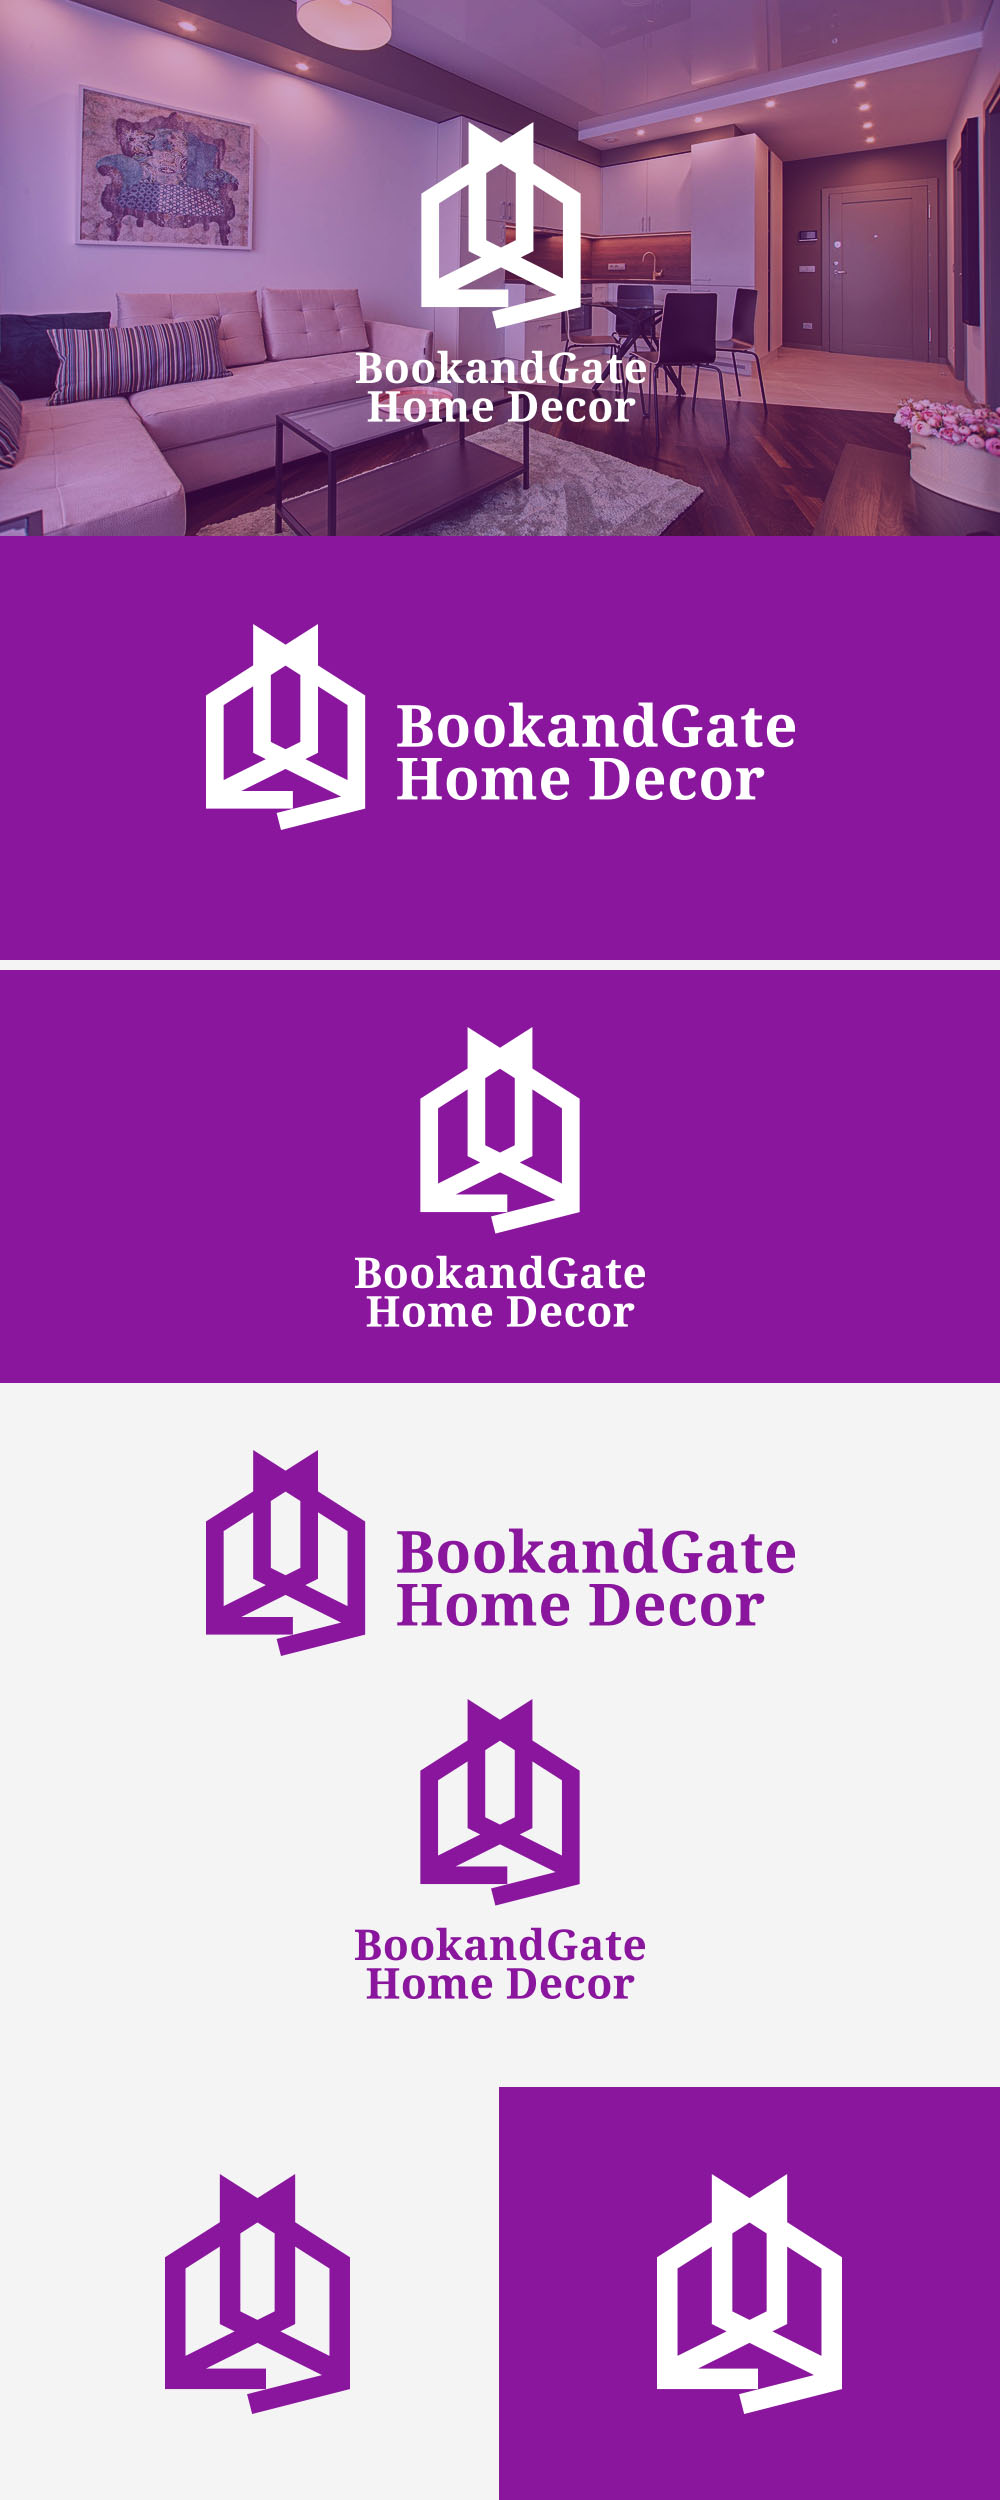 BookandGate Home Decor Presentation.jpg